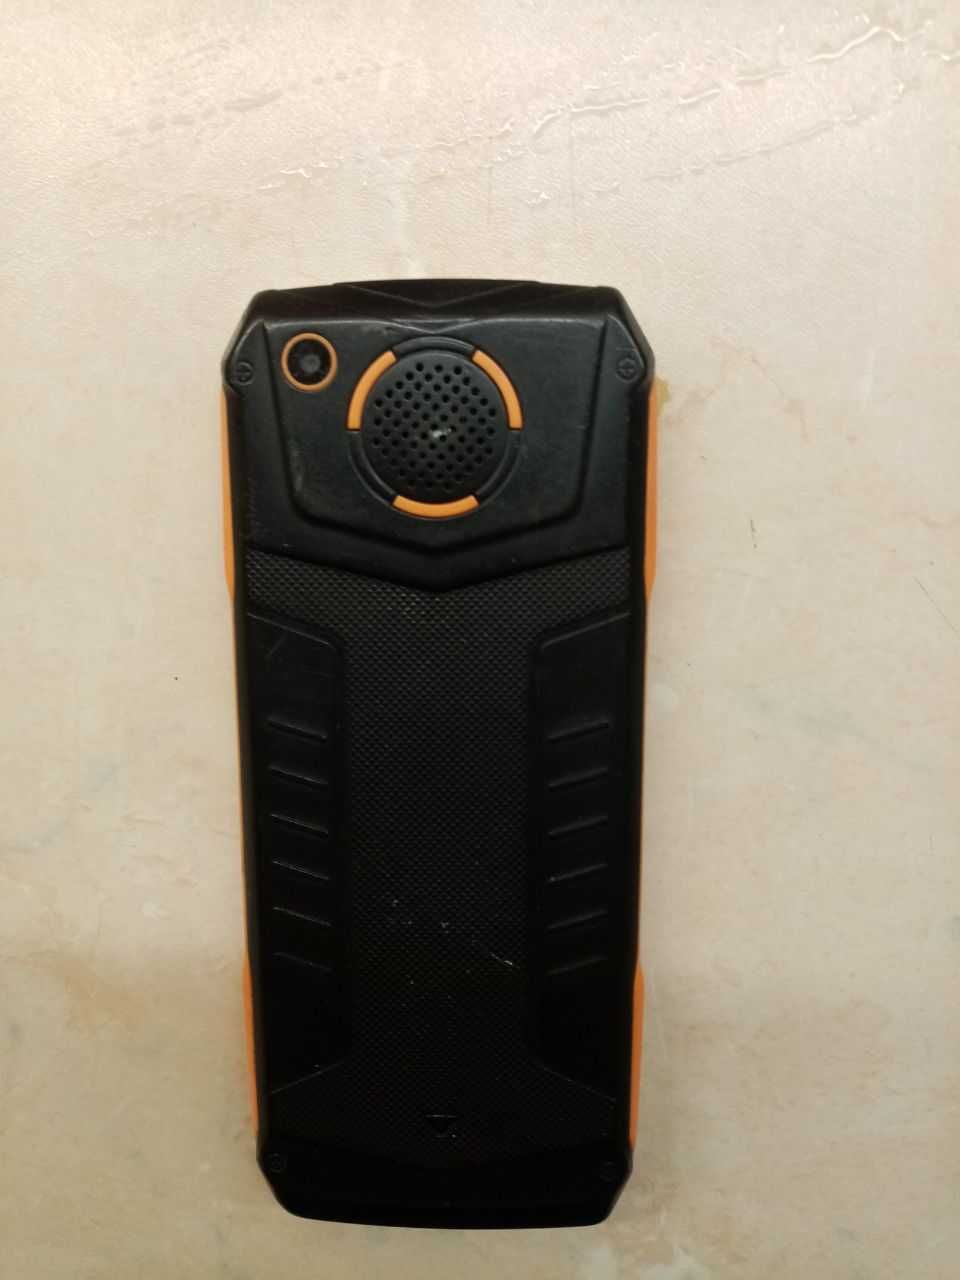 ERGO F246 Shield Dual Sim Black/Orange